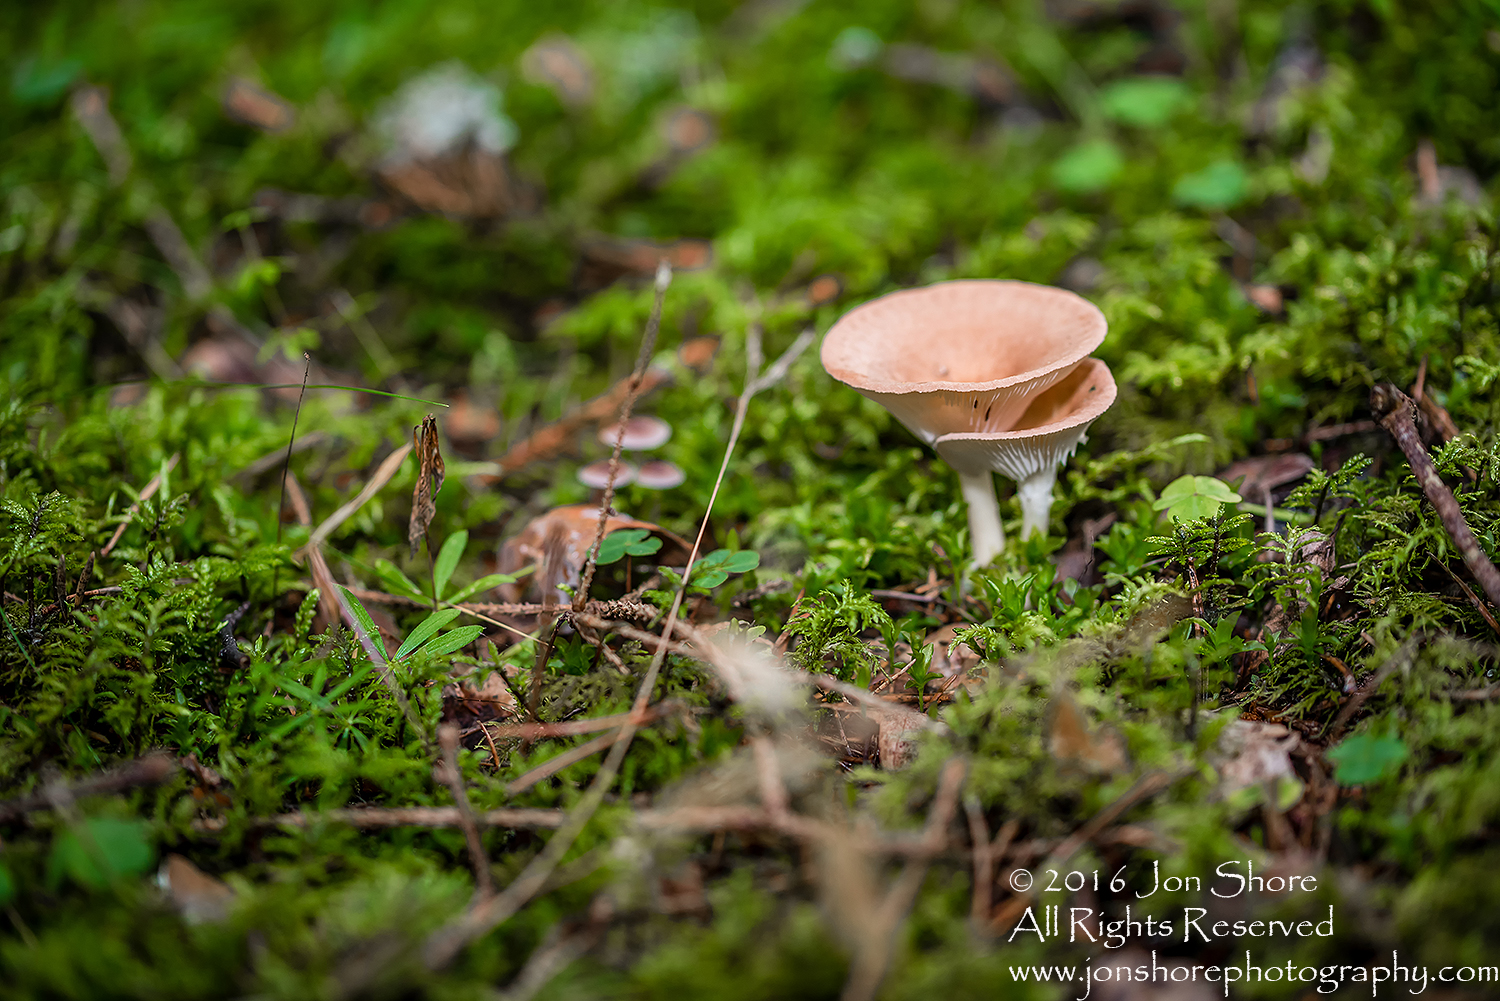 Wild Mushroom Close-up - Roja, Latvia. Tamron 90mm Macro lens